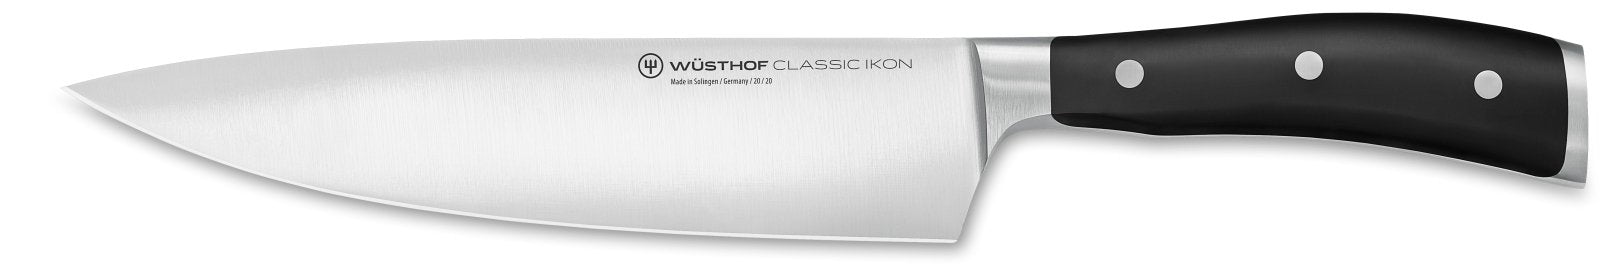 Wusthof Classic IKON Knife Set 2 Piece - WT1120360205 - The Cotswold Knife Company